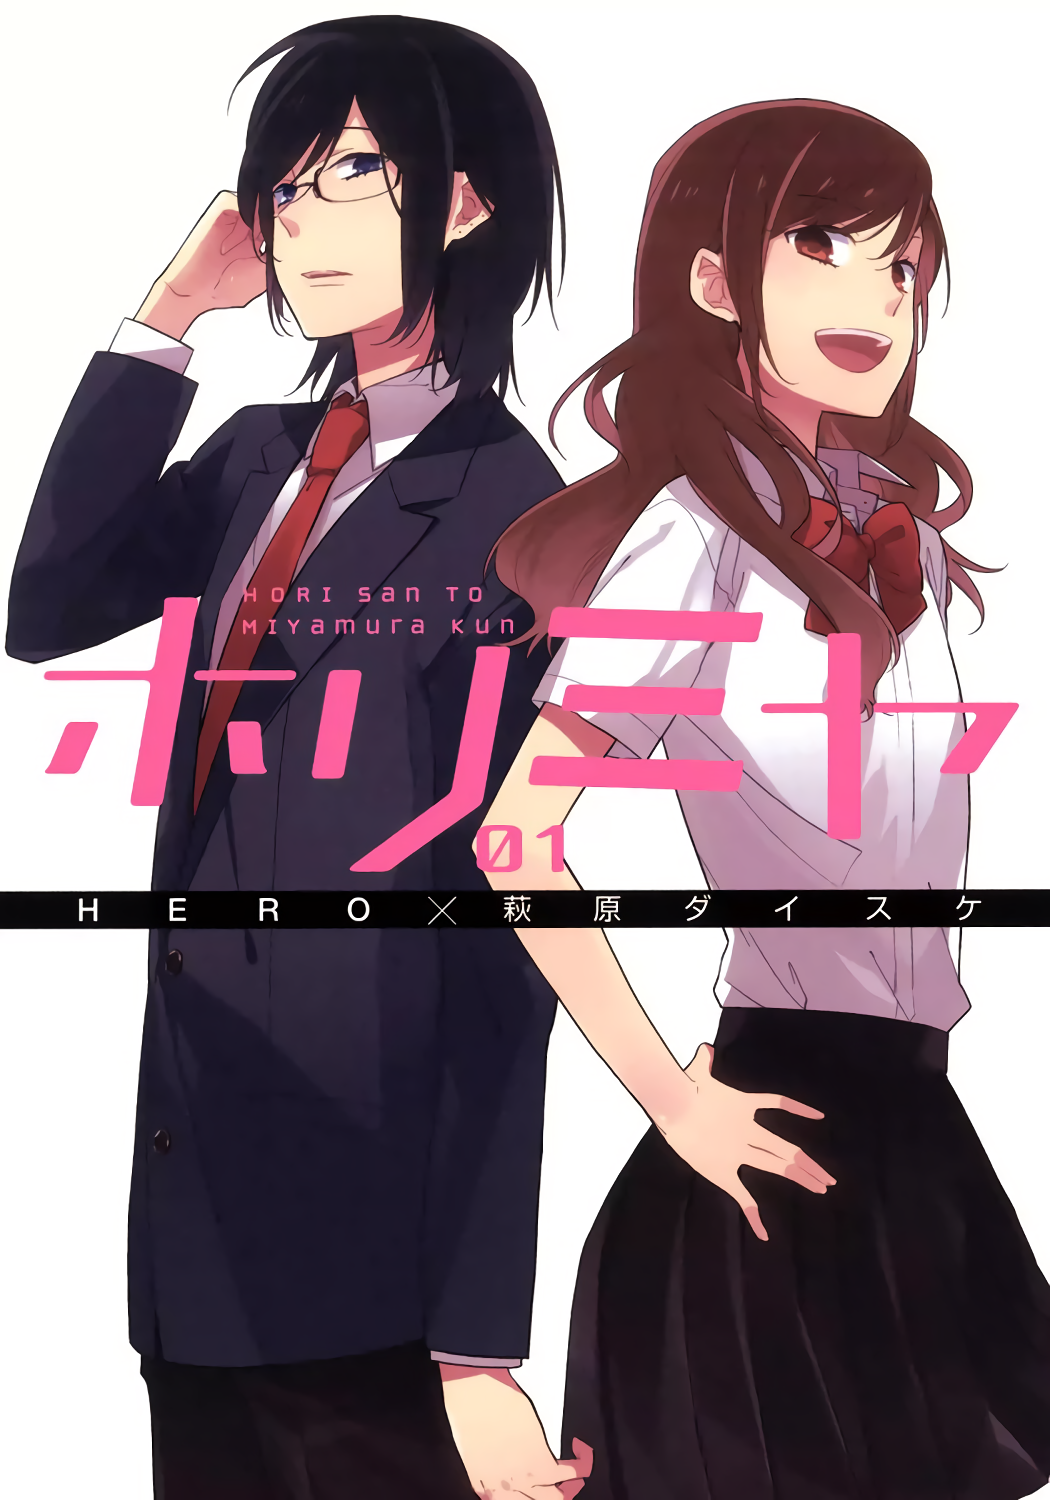 miyamura finalmente se declara #horimiya #hori #miyamura #anime #anime